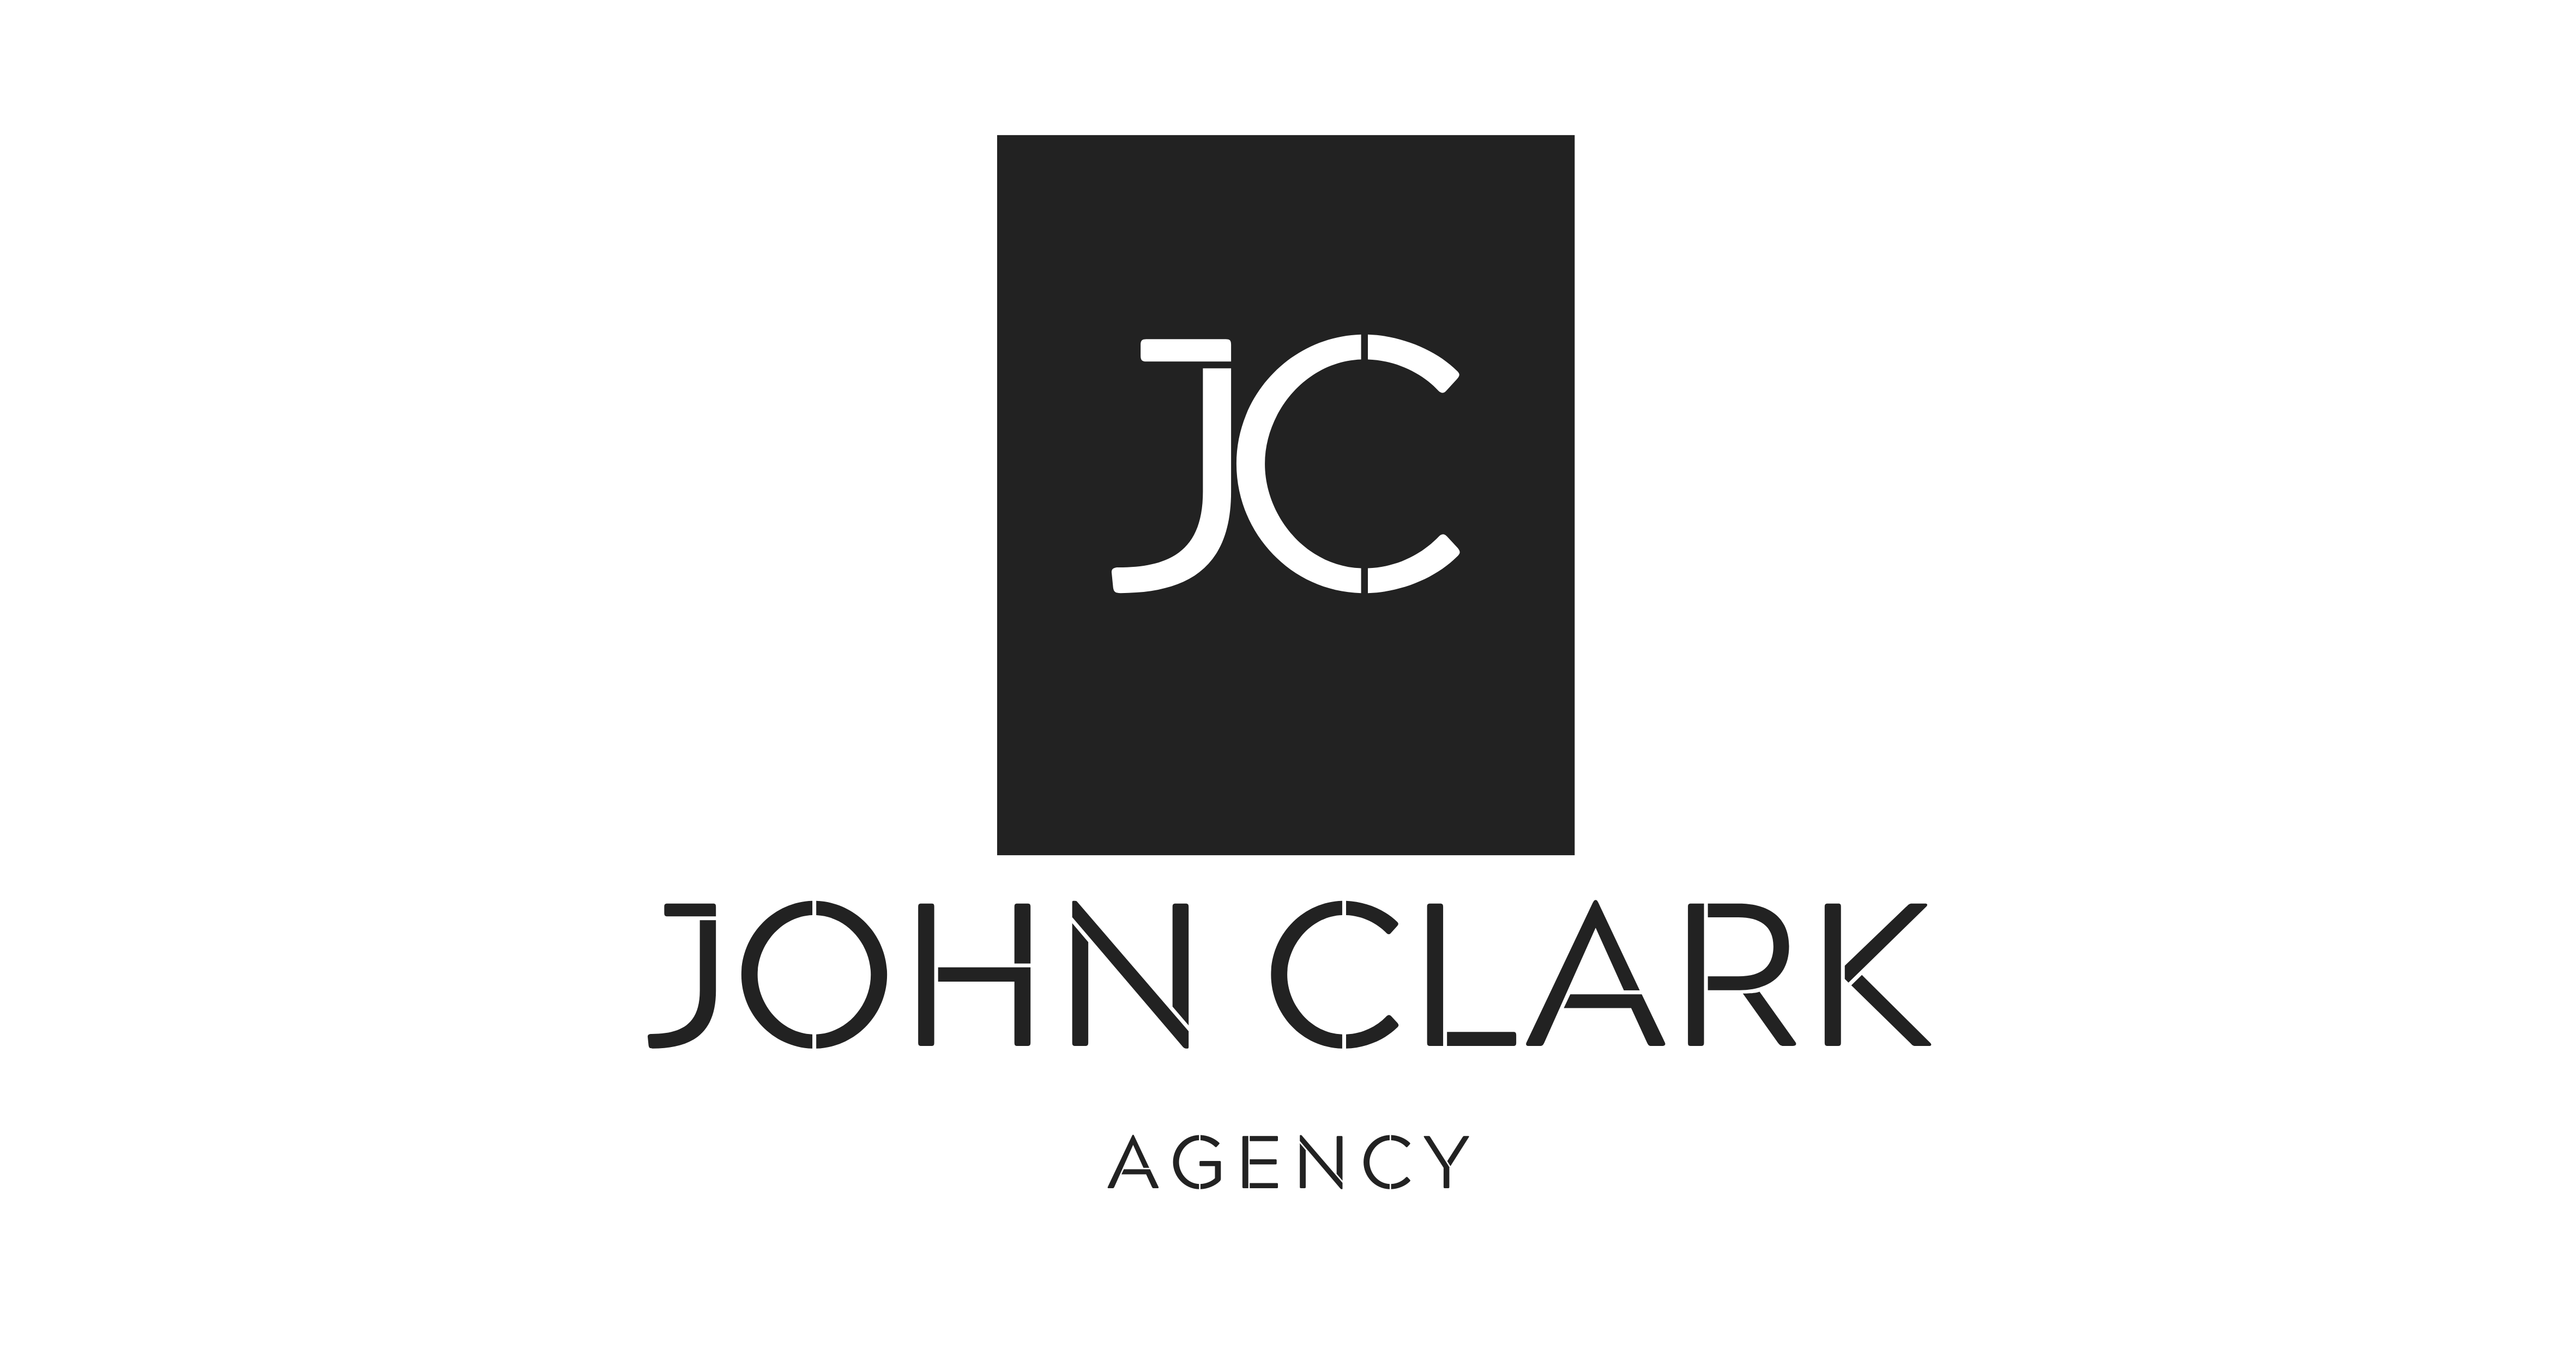 John Clark Agency